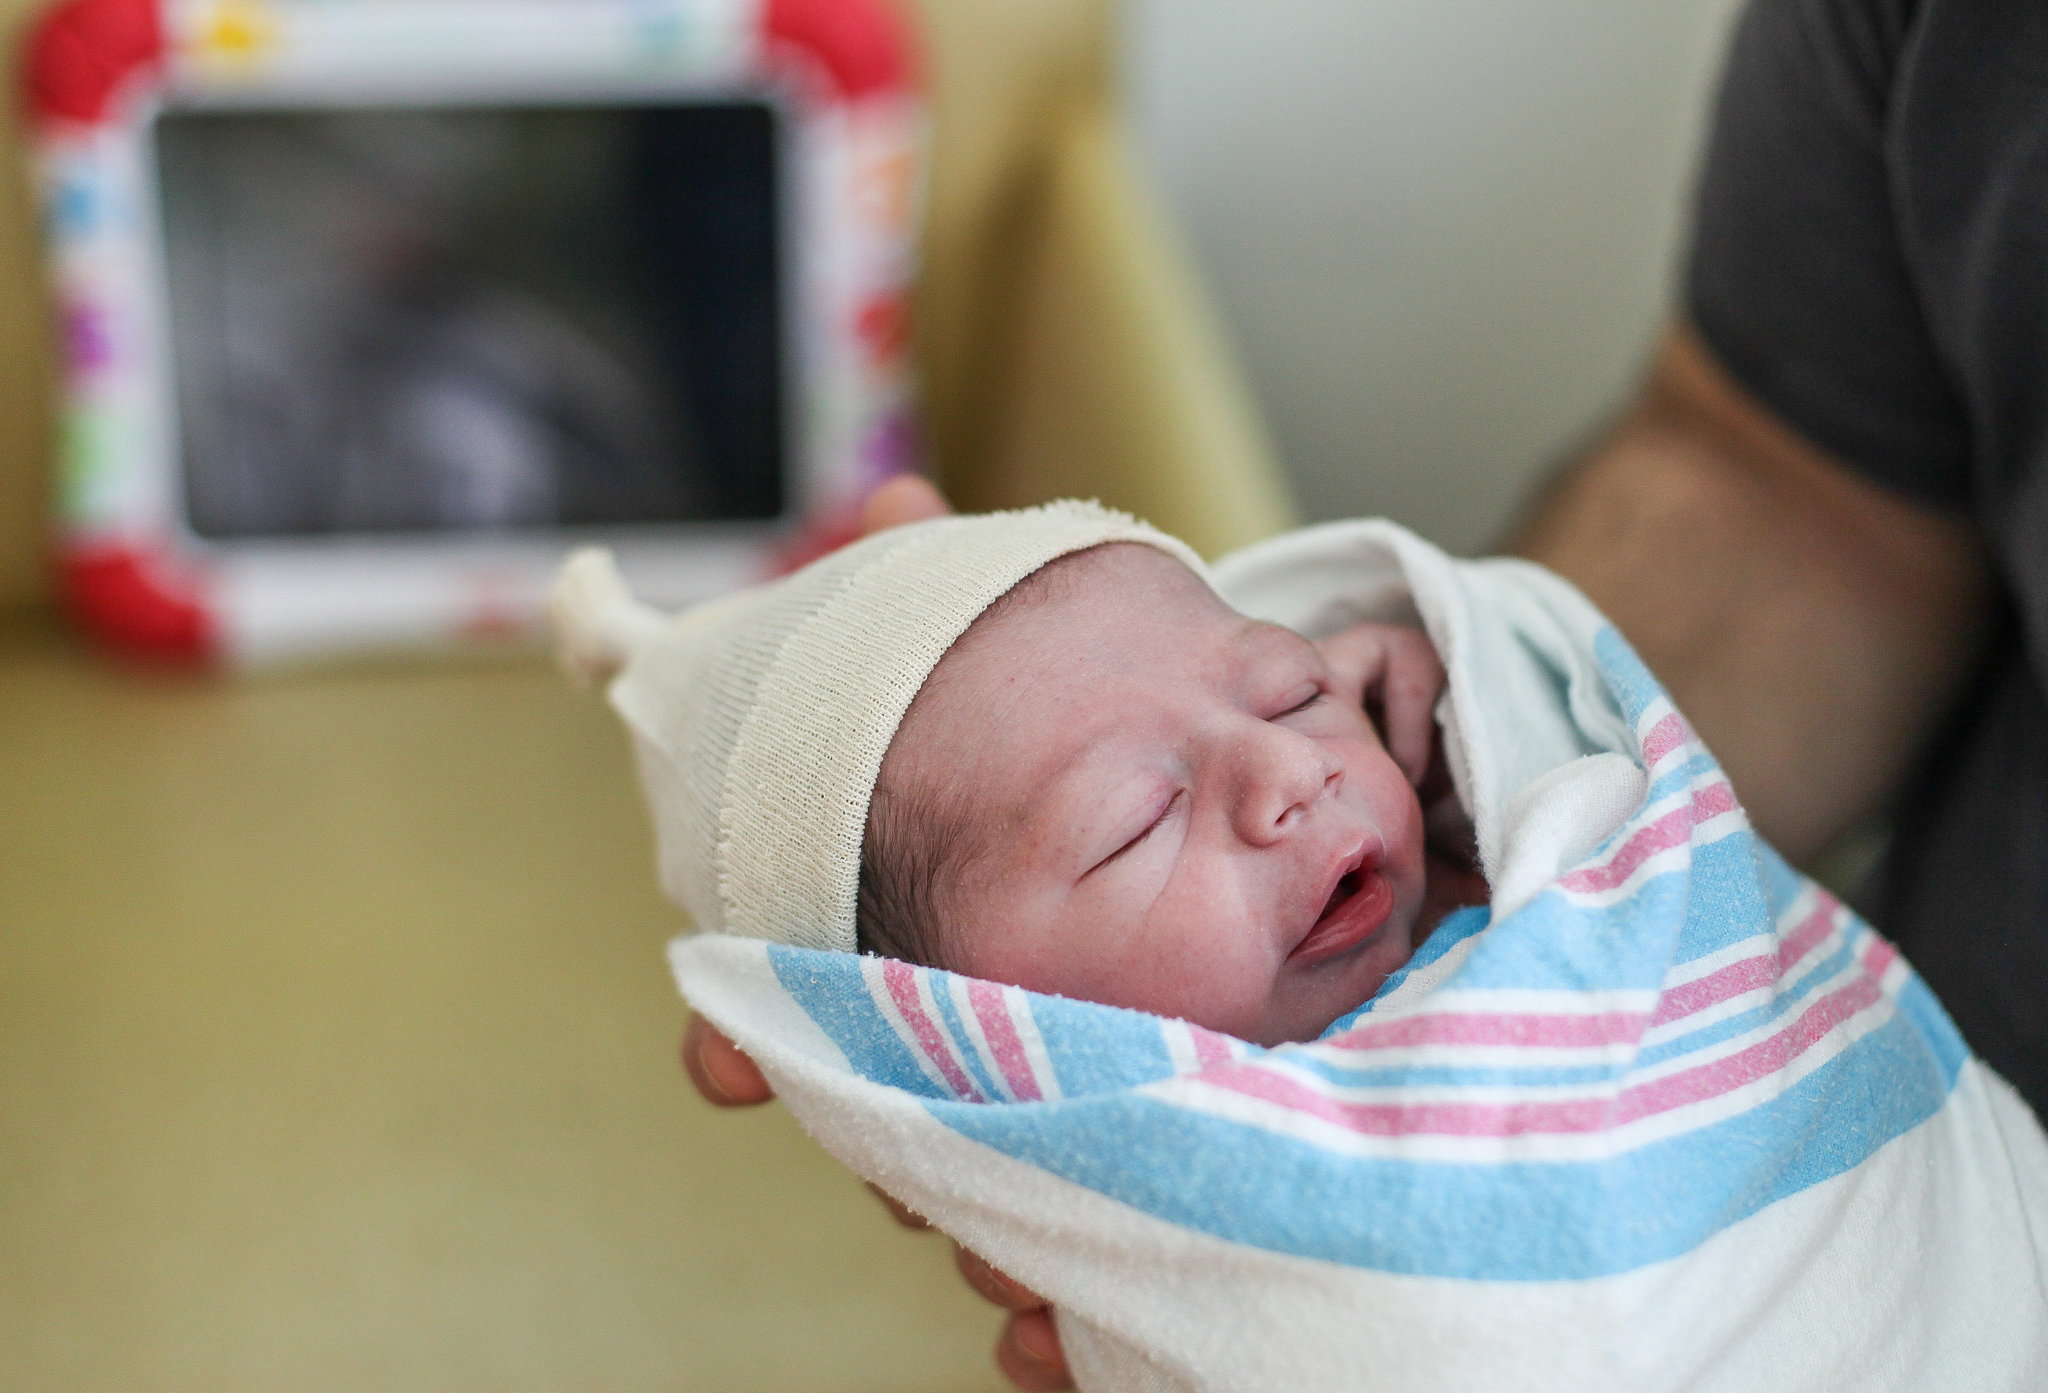 birth-center-hospital-photographer-photography-breastfeeding-south-florida-boca-regional-delray-palms-hollywood-pumping-water-natural-family-newborn-43.jpg